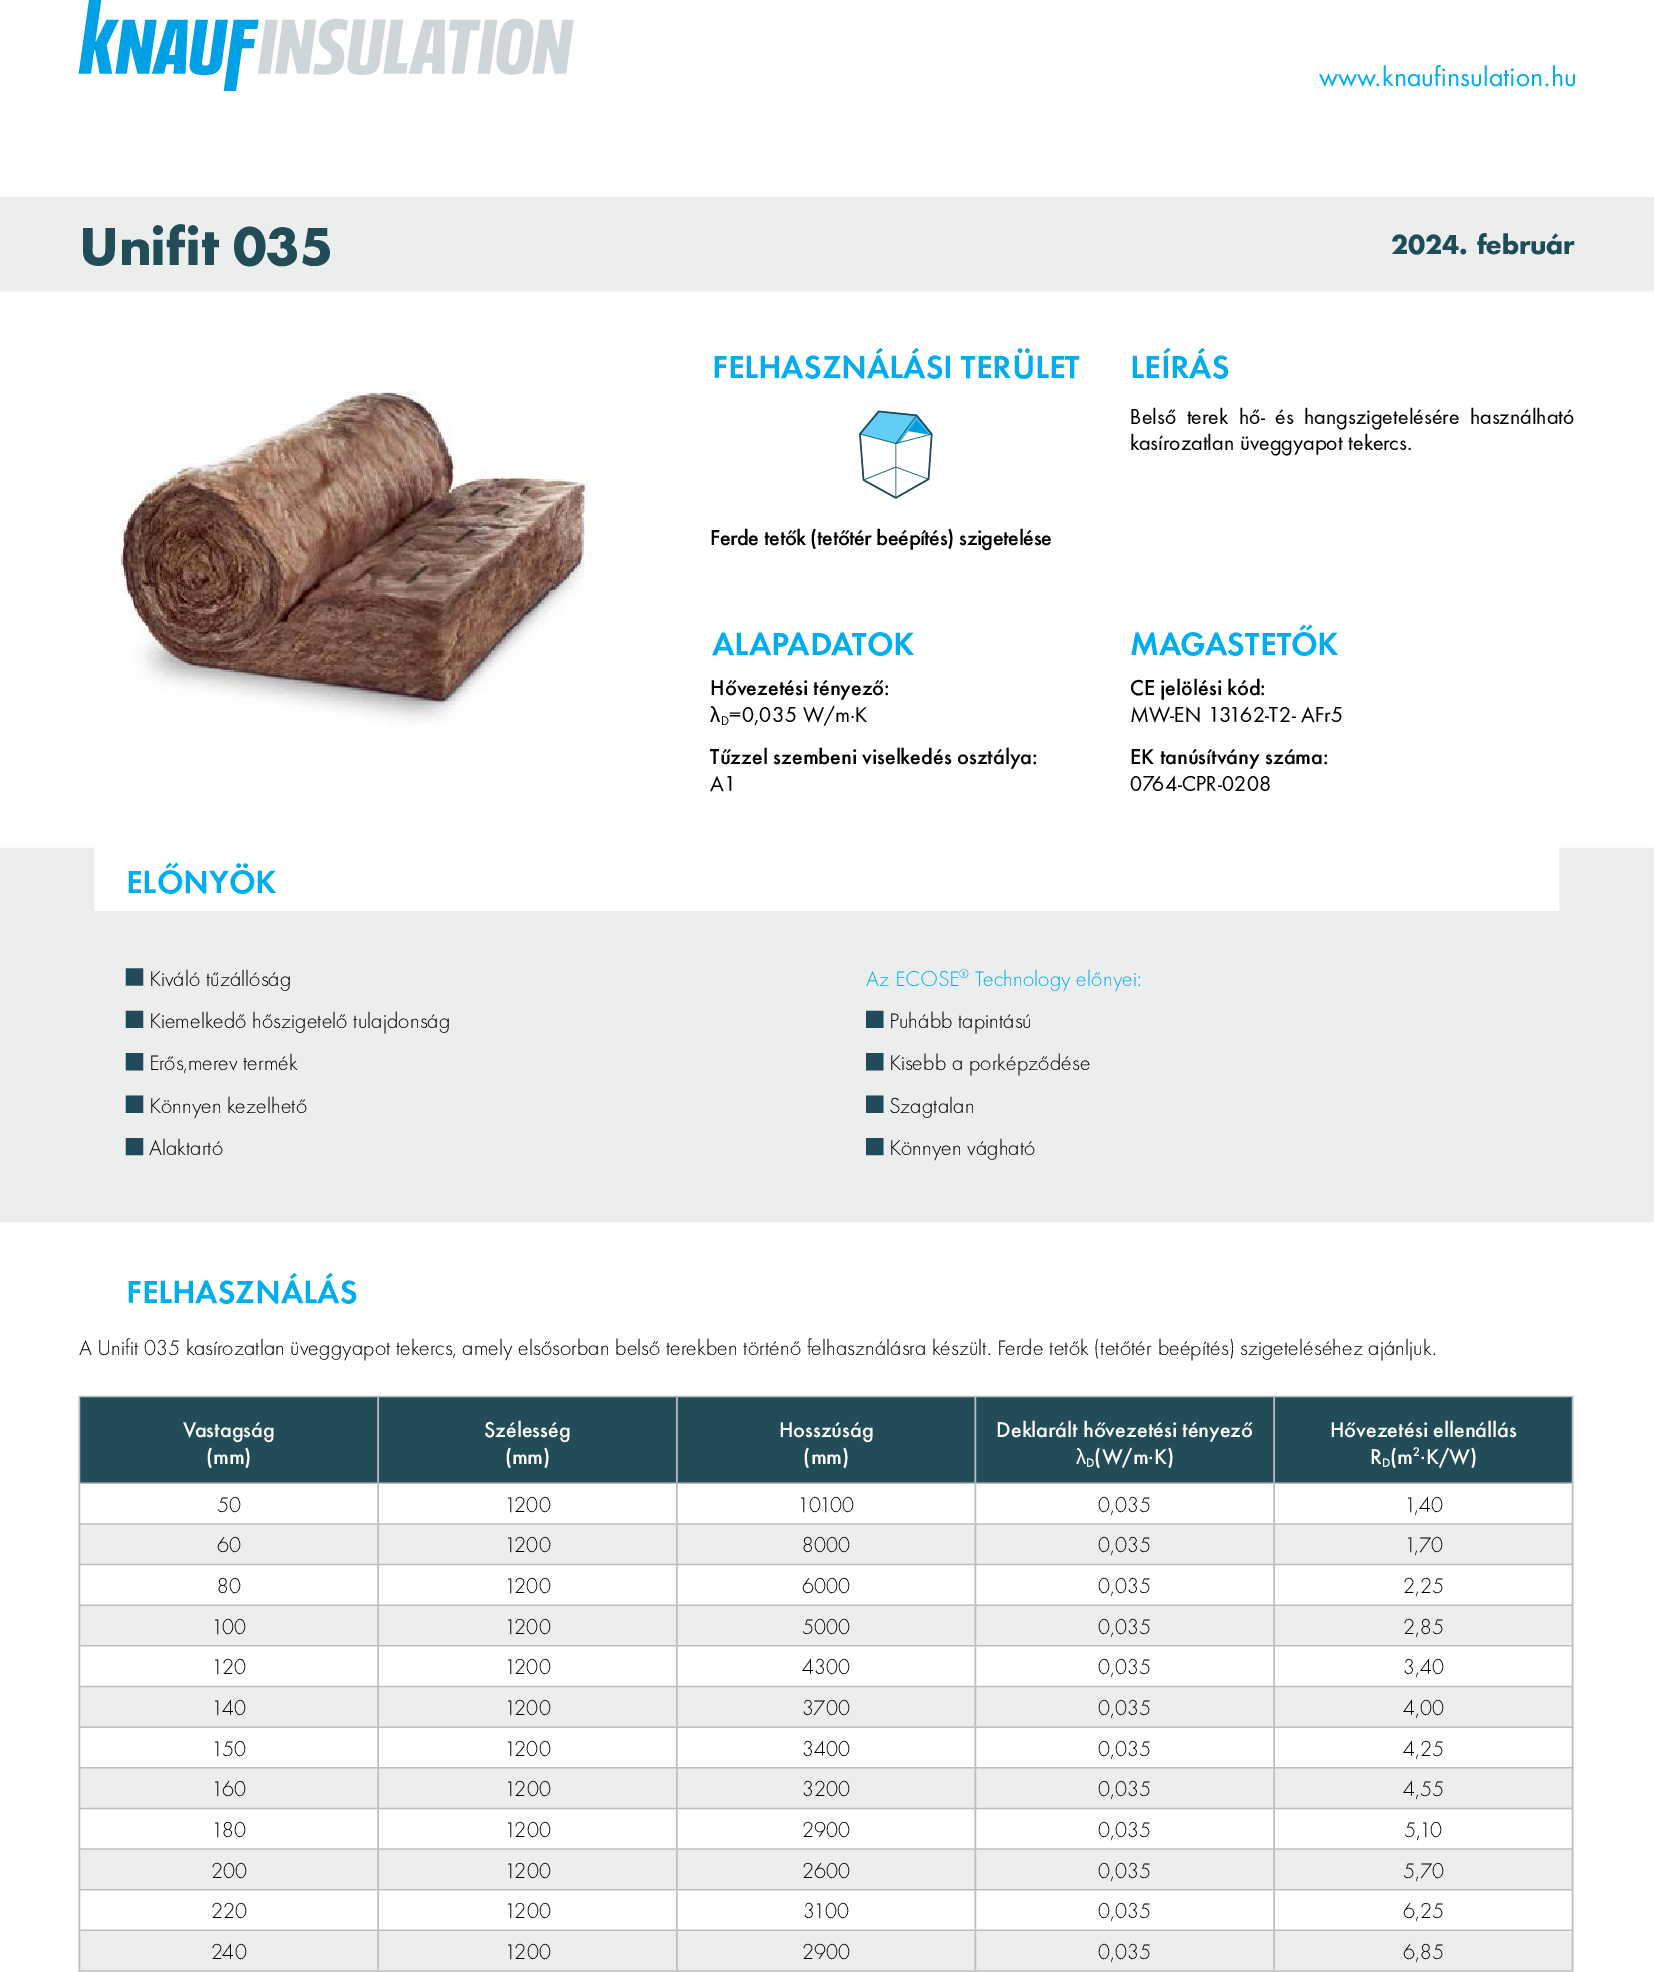 Unifit 035 műszaki adatlap